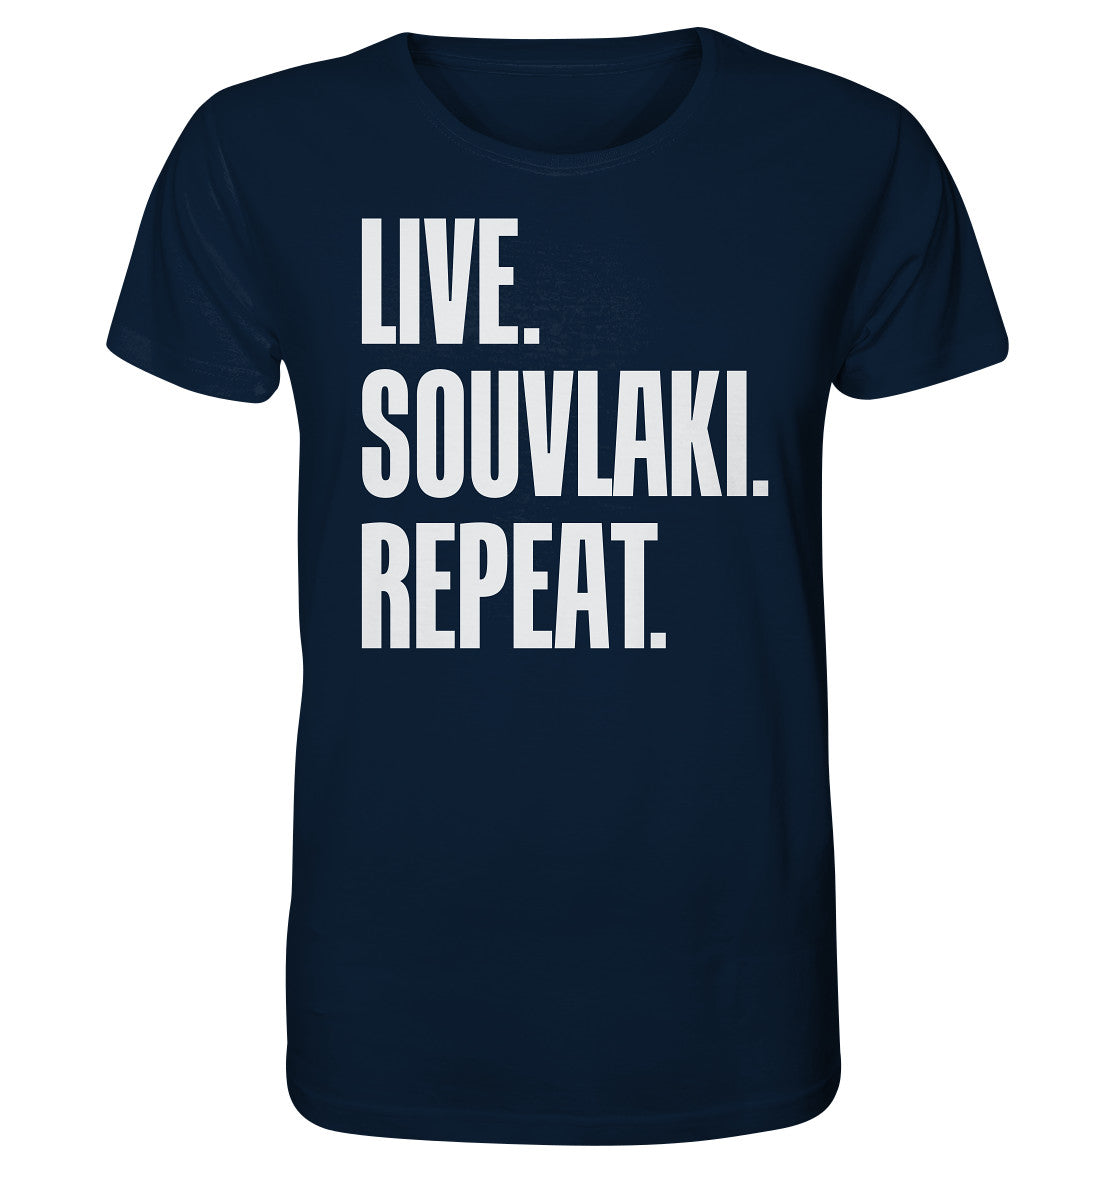 LIVE. SOUVLAKI. REPEAT. - Organic Shirt